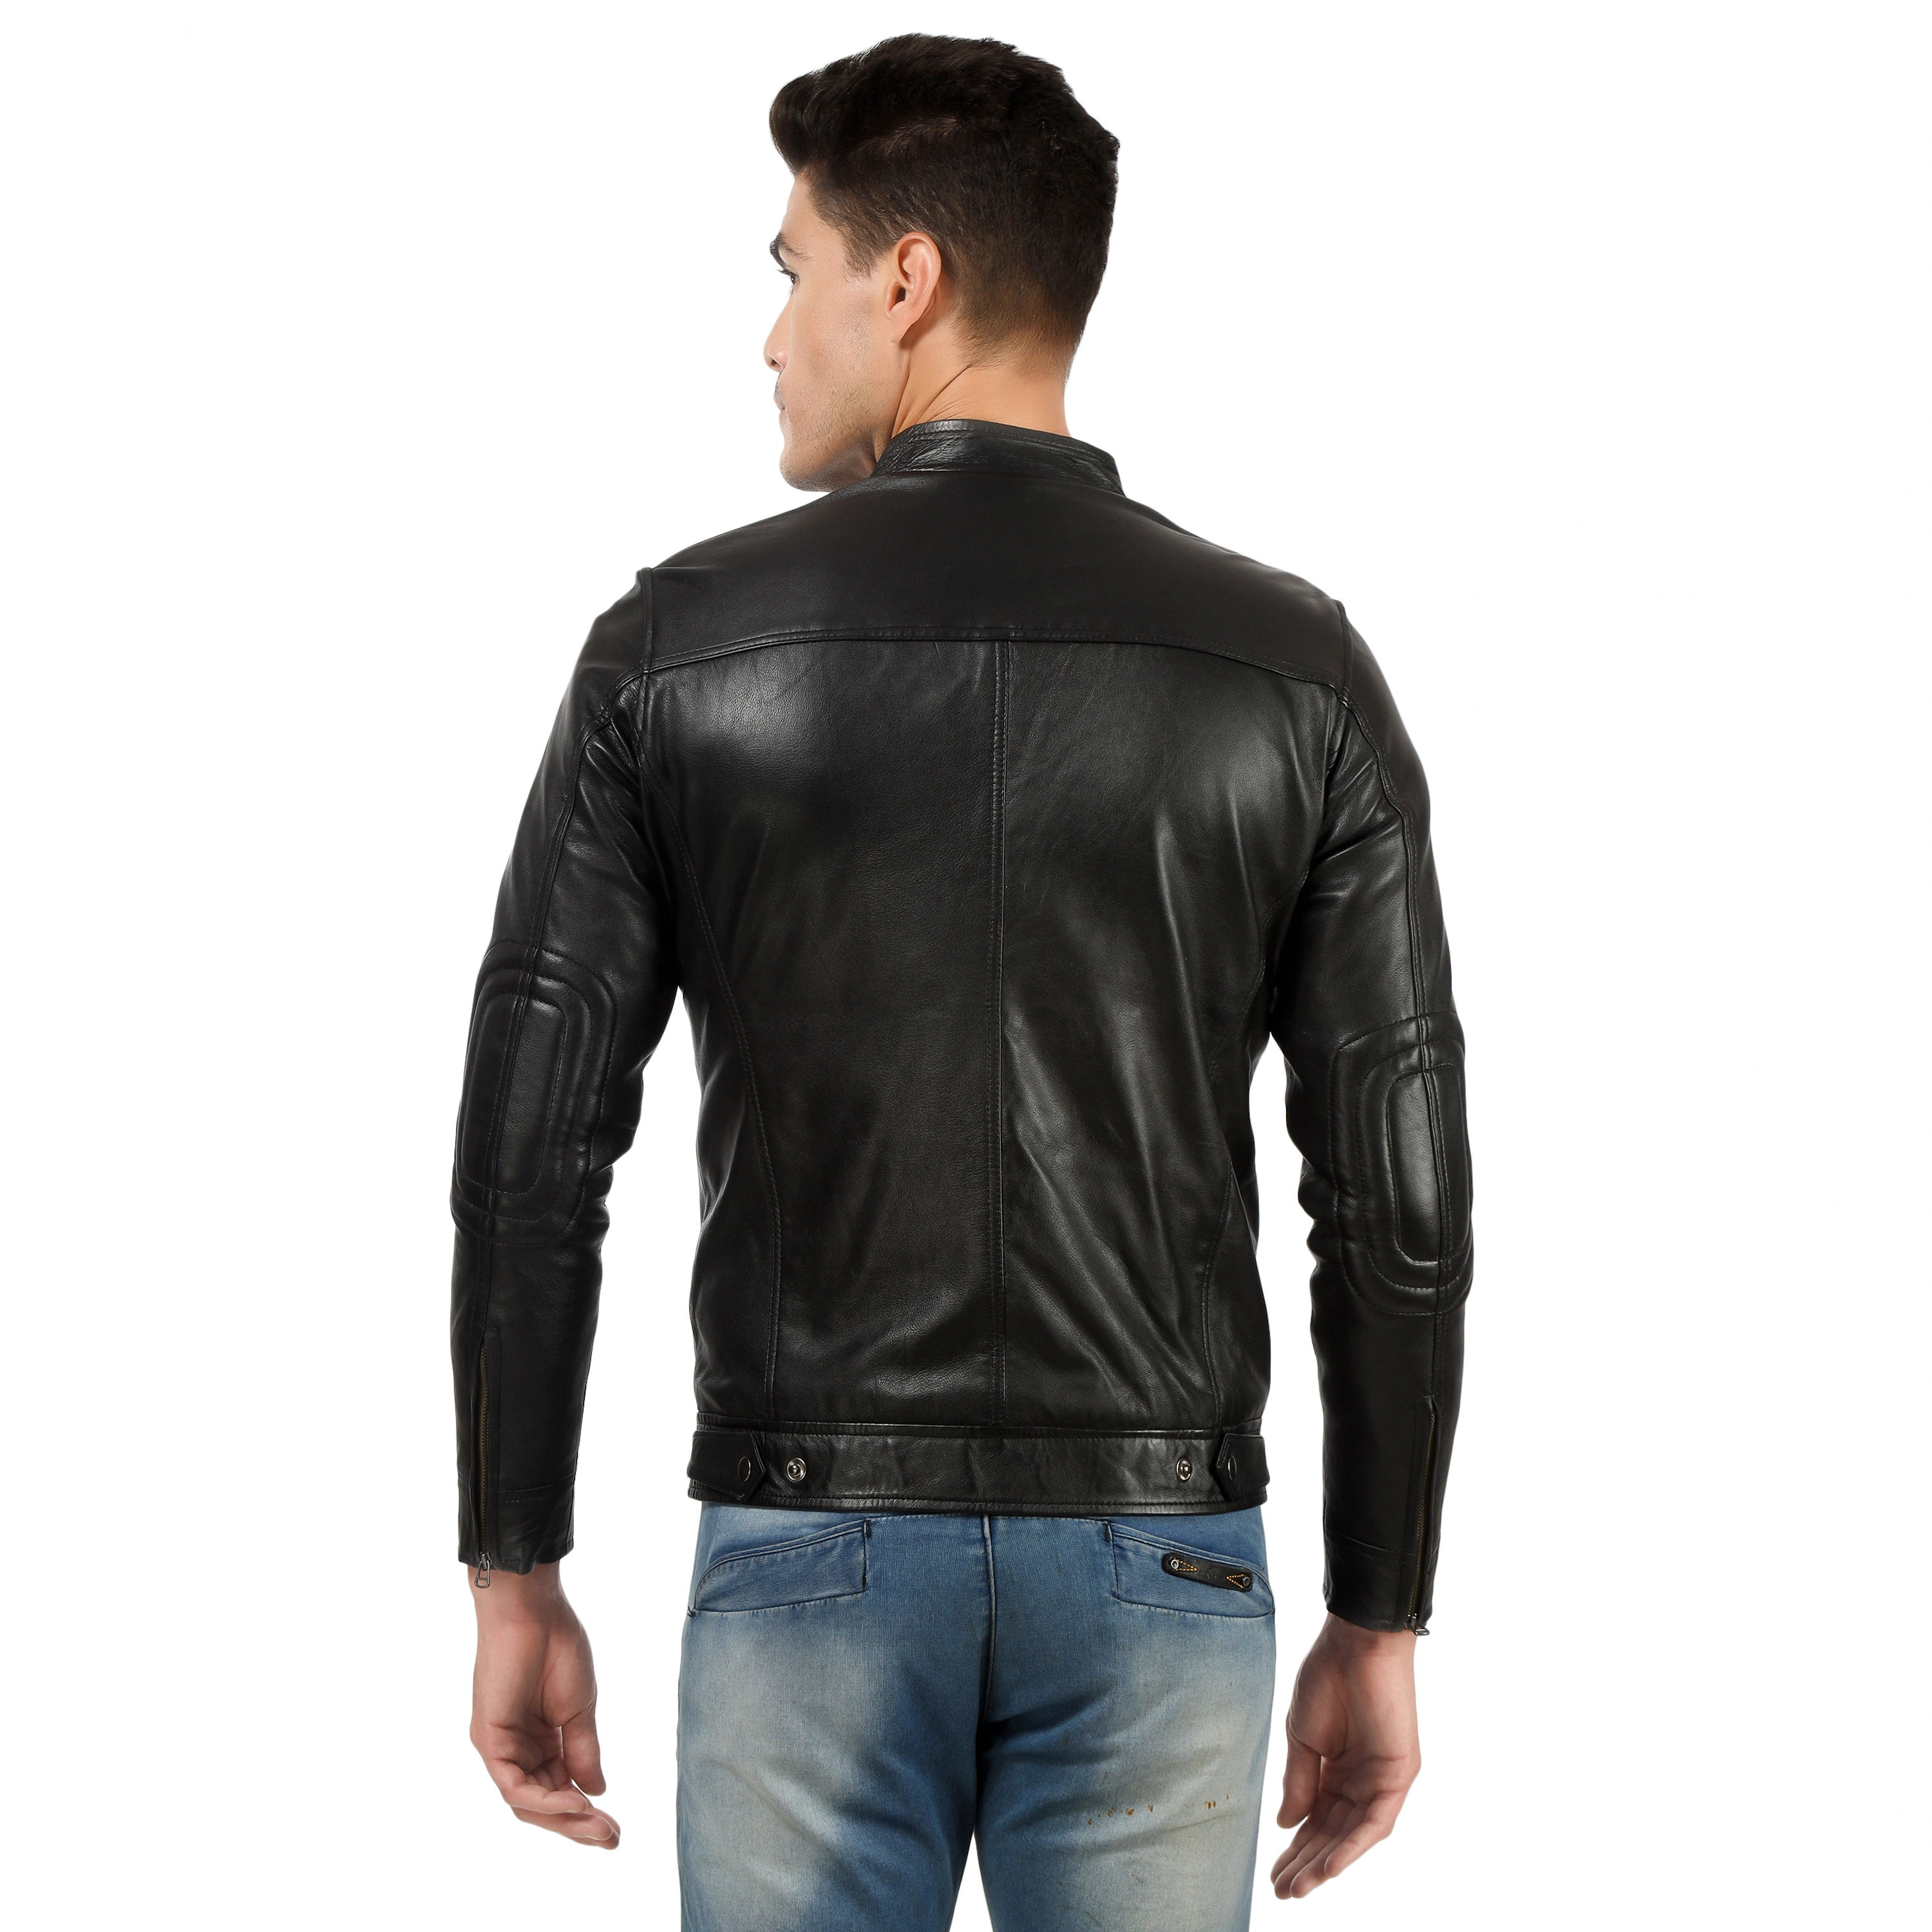 CHARMSHILP - Men's Genuine Premium Leather Jacket for Men And Boys..-M-3